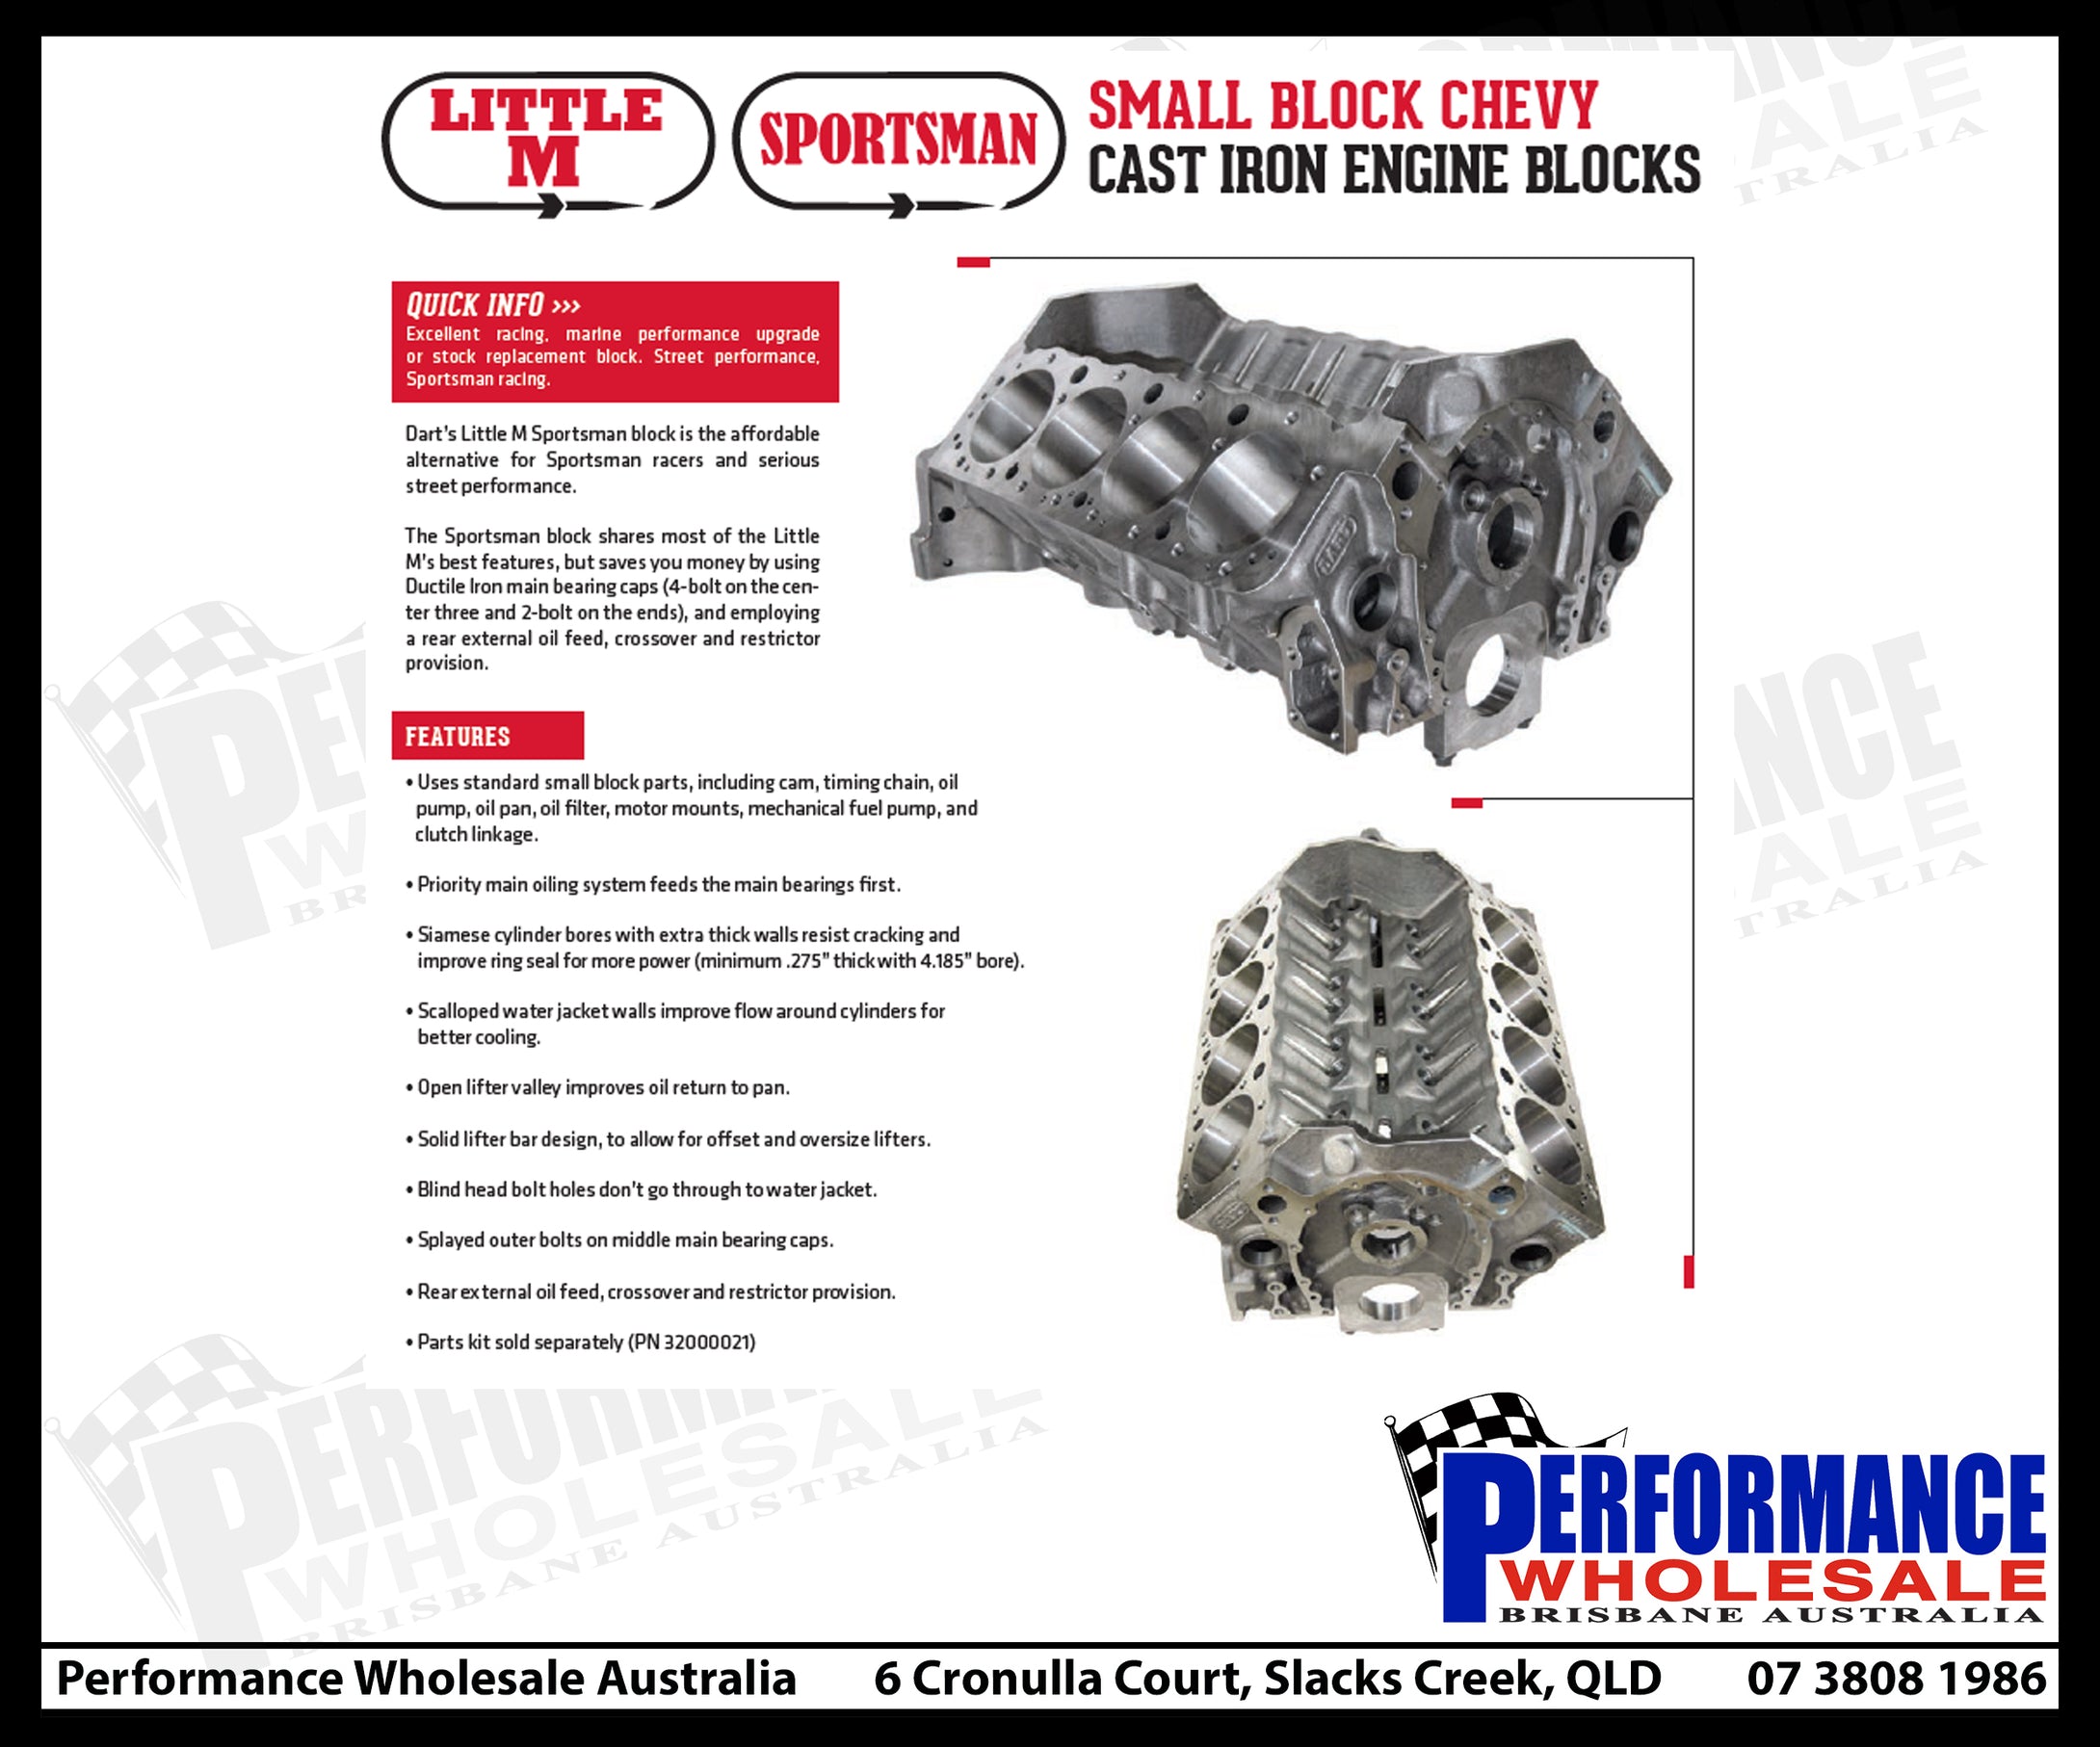 Dart Little M Sportsman Chevrolet Small Block Iron Block – 4.000-4.125 In. Bore, 9.025 In. Deck